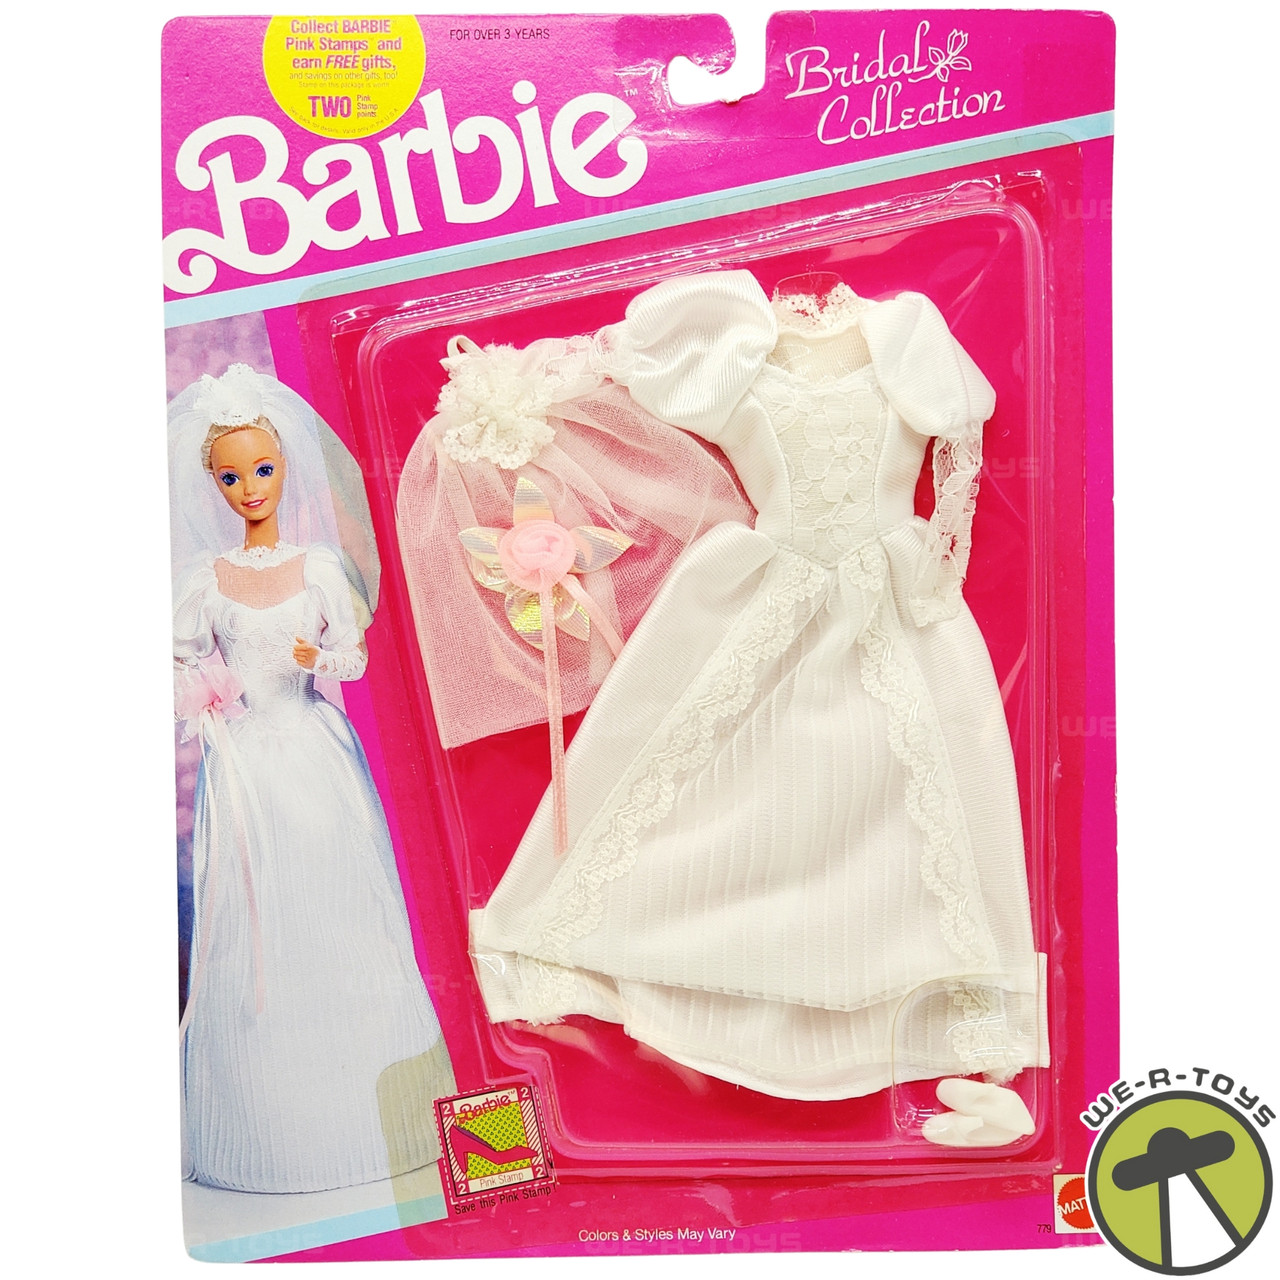 Barbie Bridal Collection Floral Lace Wedding Dress Fashion Mattel 1990 NRFP